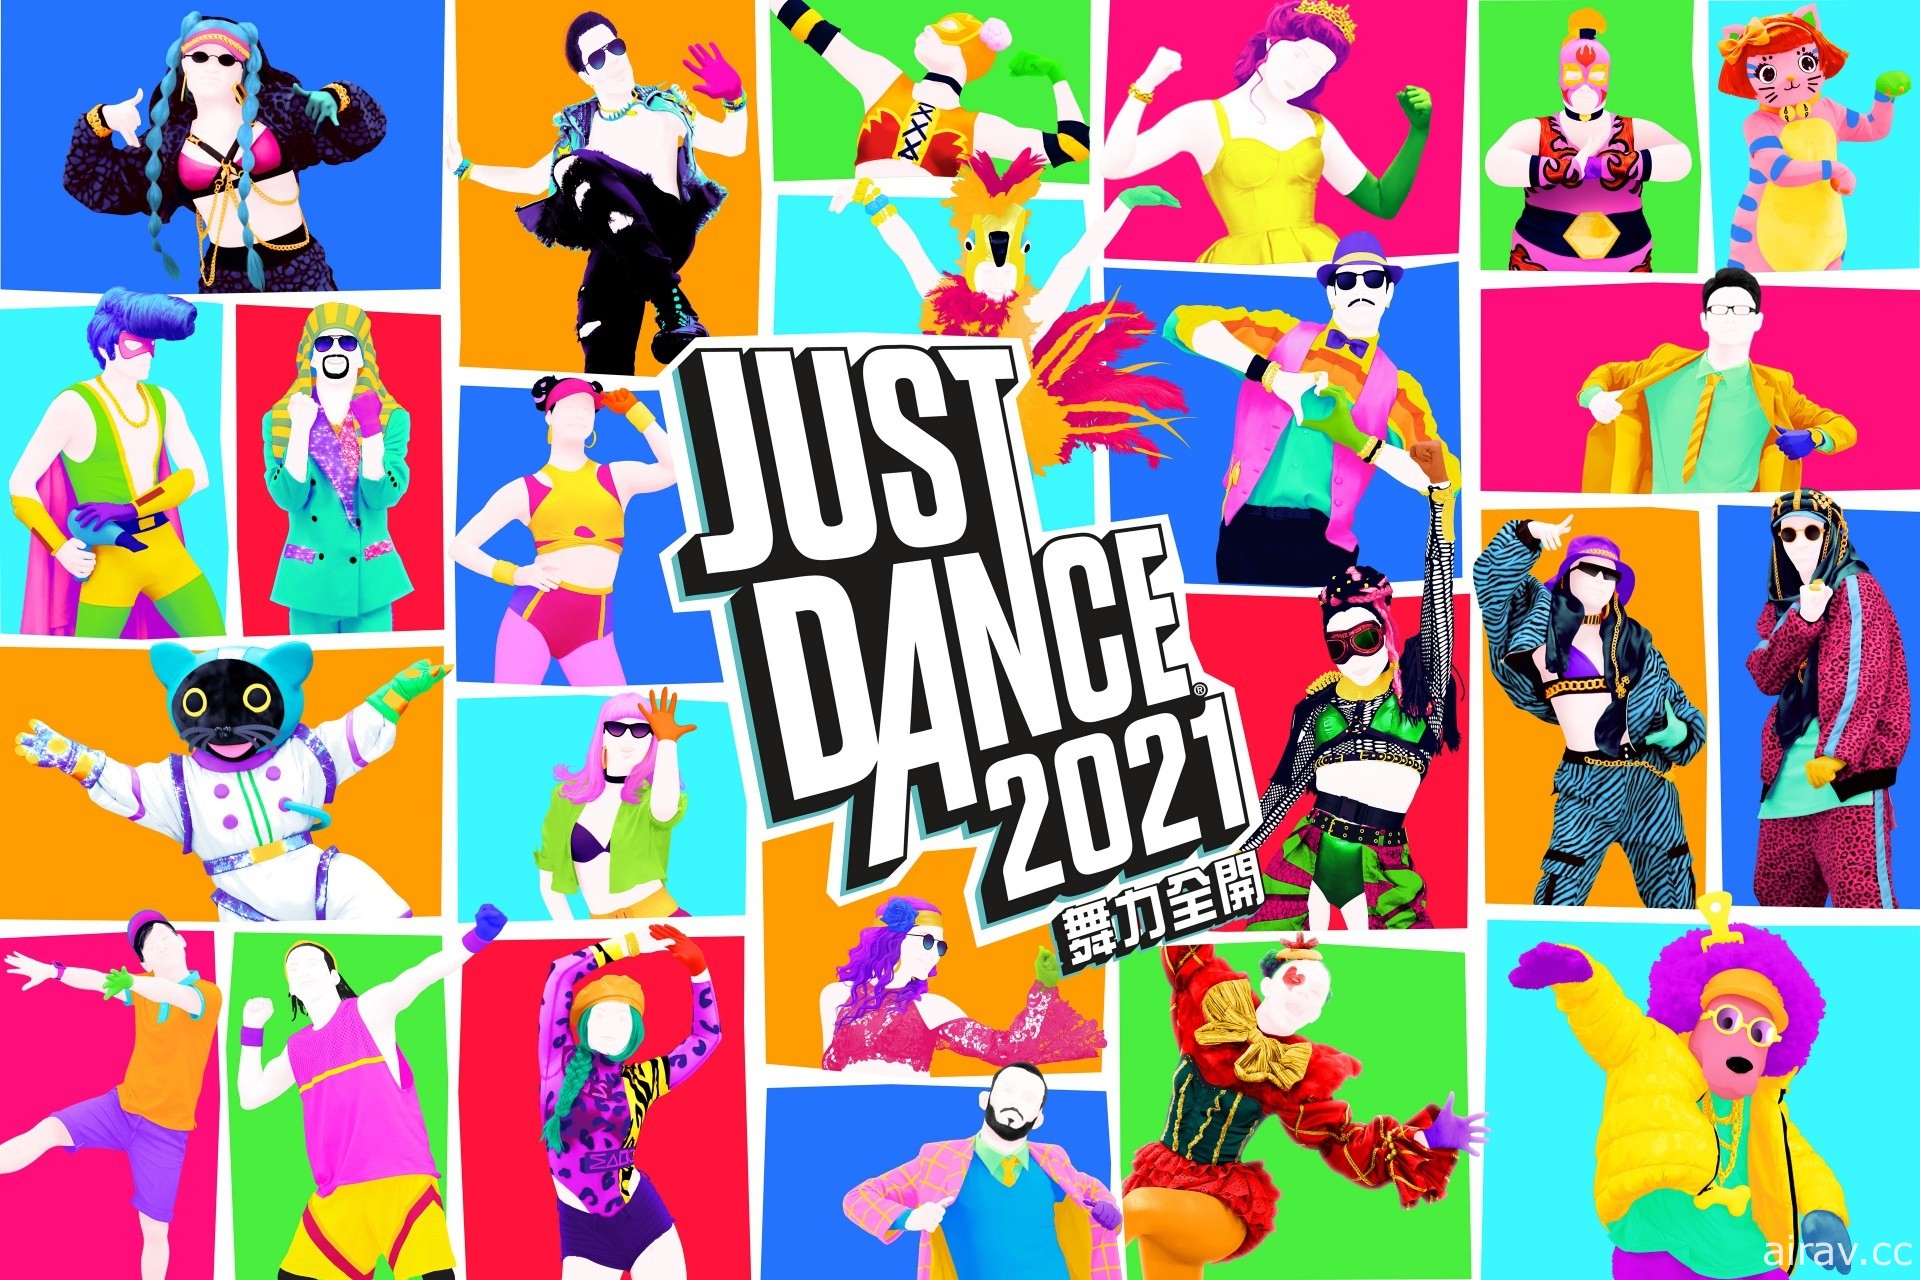 《Just Dance 舞力全開 2021》預定 11 月 24 日登陸 PS5 和 Xbox Series X|S 平台